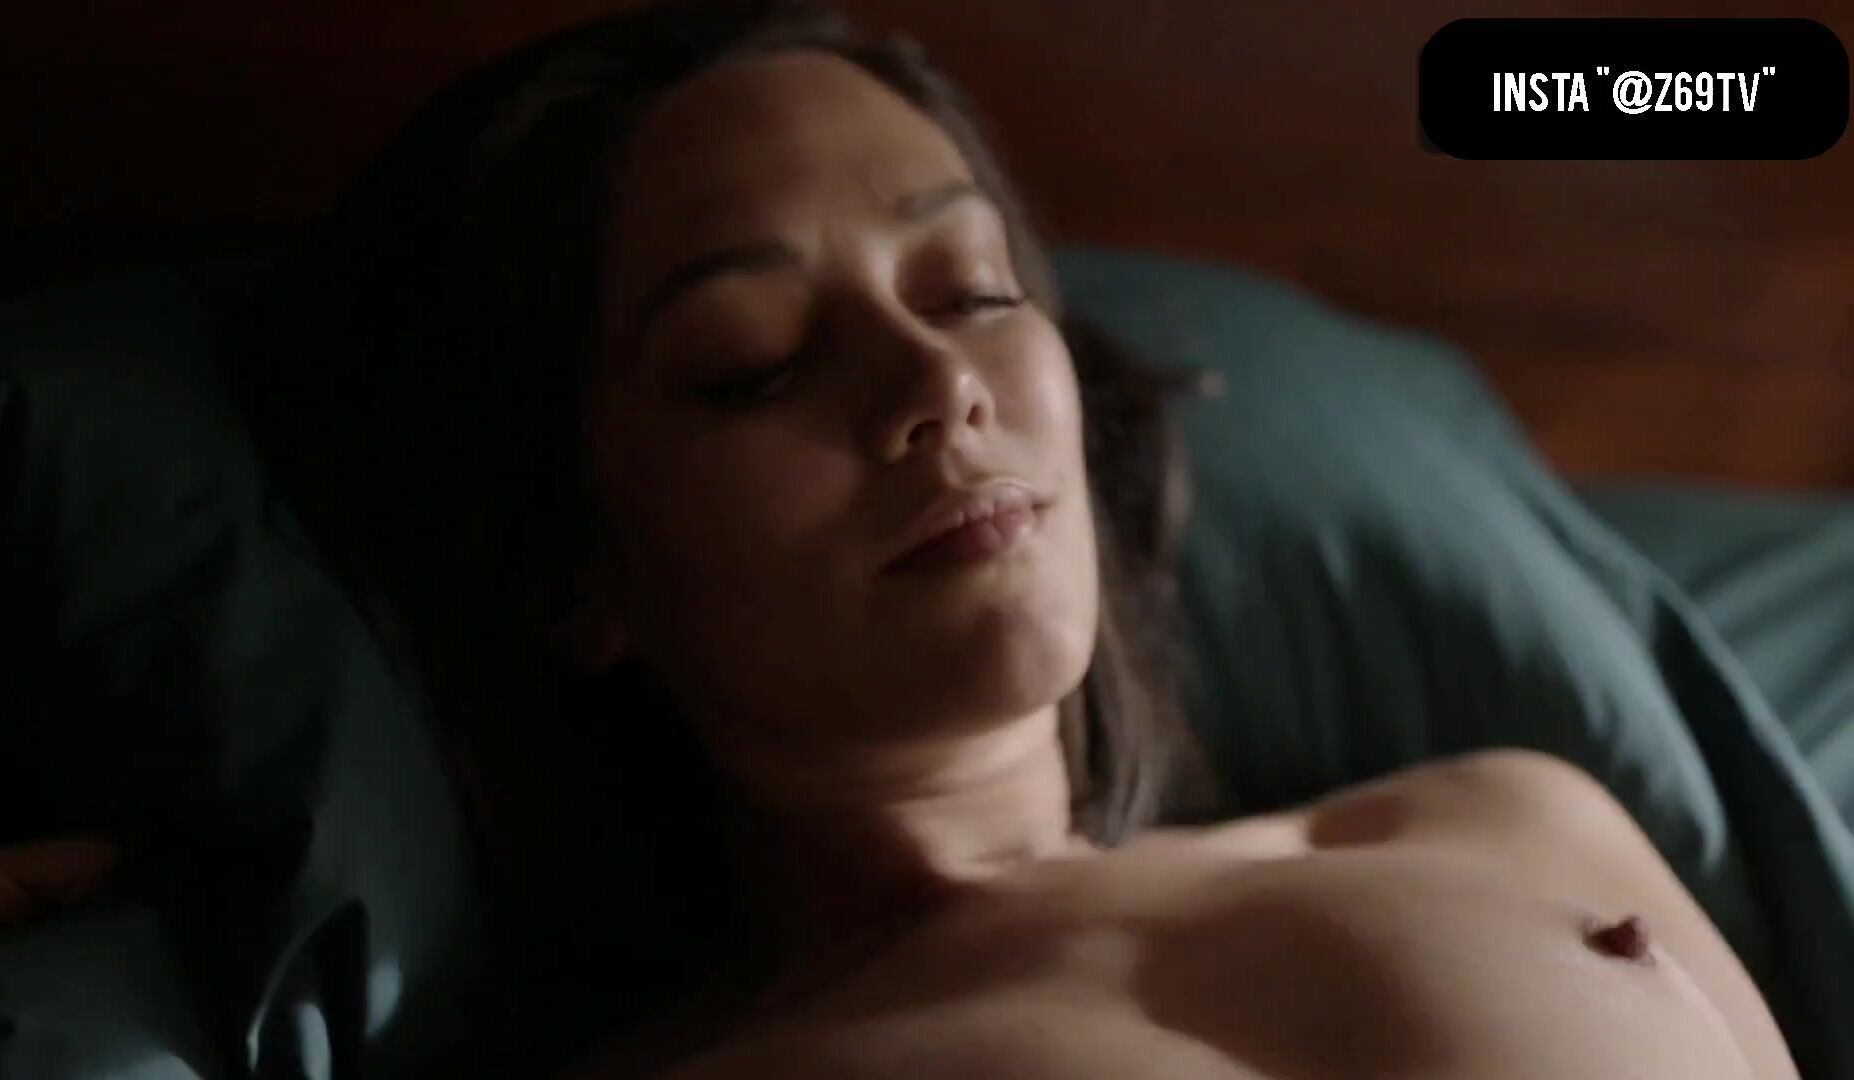 Bongacams Lesbian sex scene of babe who puts condom on vibrator and fucks bestie in Vida Season 2 3way - 1